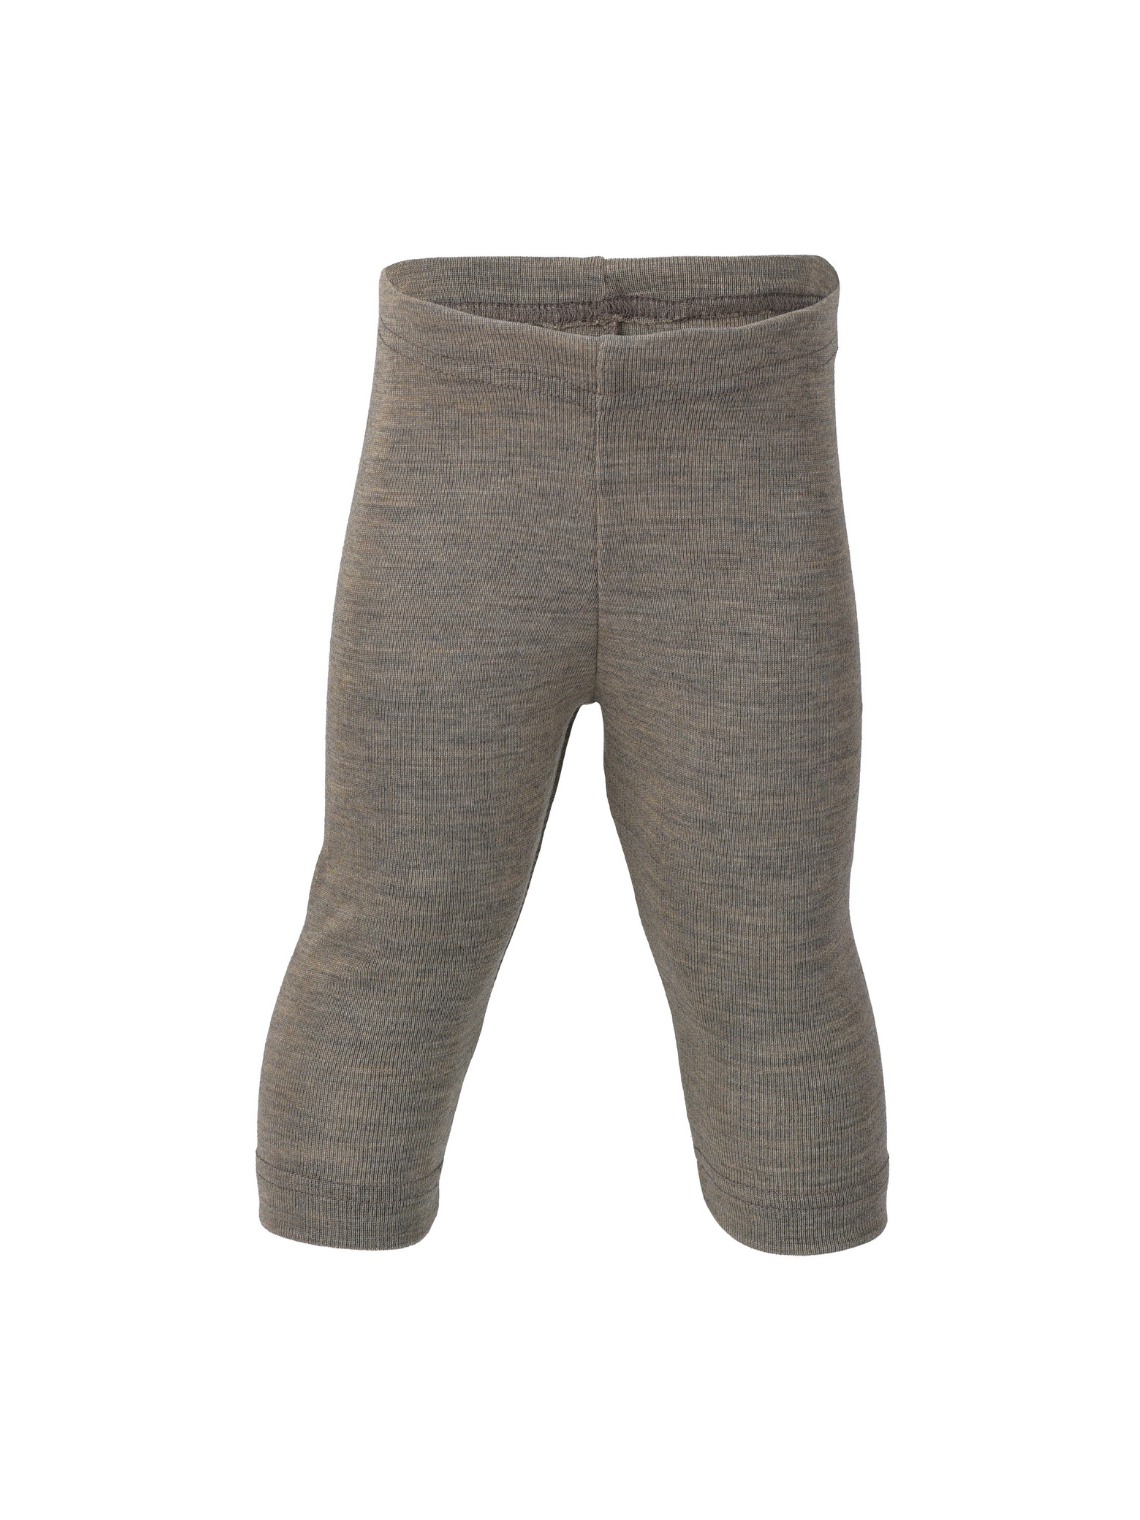 Children's leggings Merino Wool + Silk, walnut, Engel